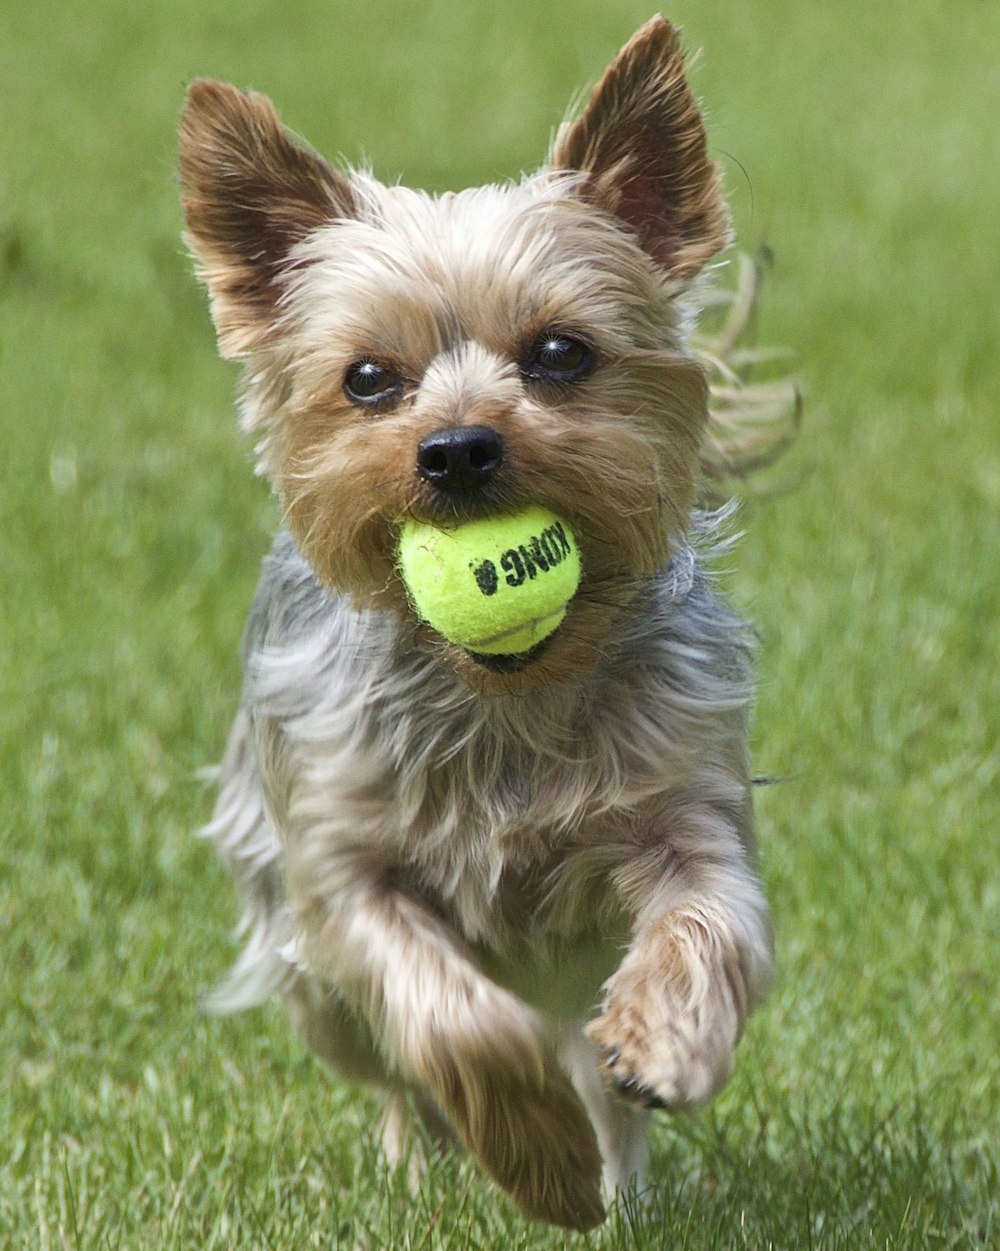 Brown and Black Yorkshire Terrier Welpe spielt tagsüber grünen Tennisball auf grünem Rasenfeld